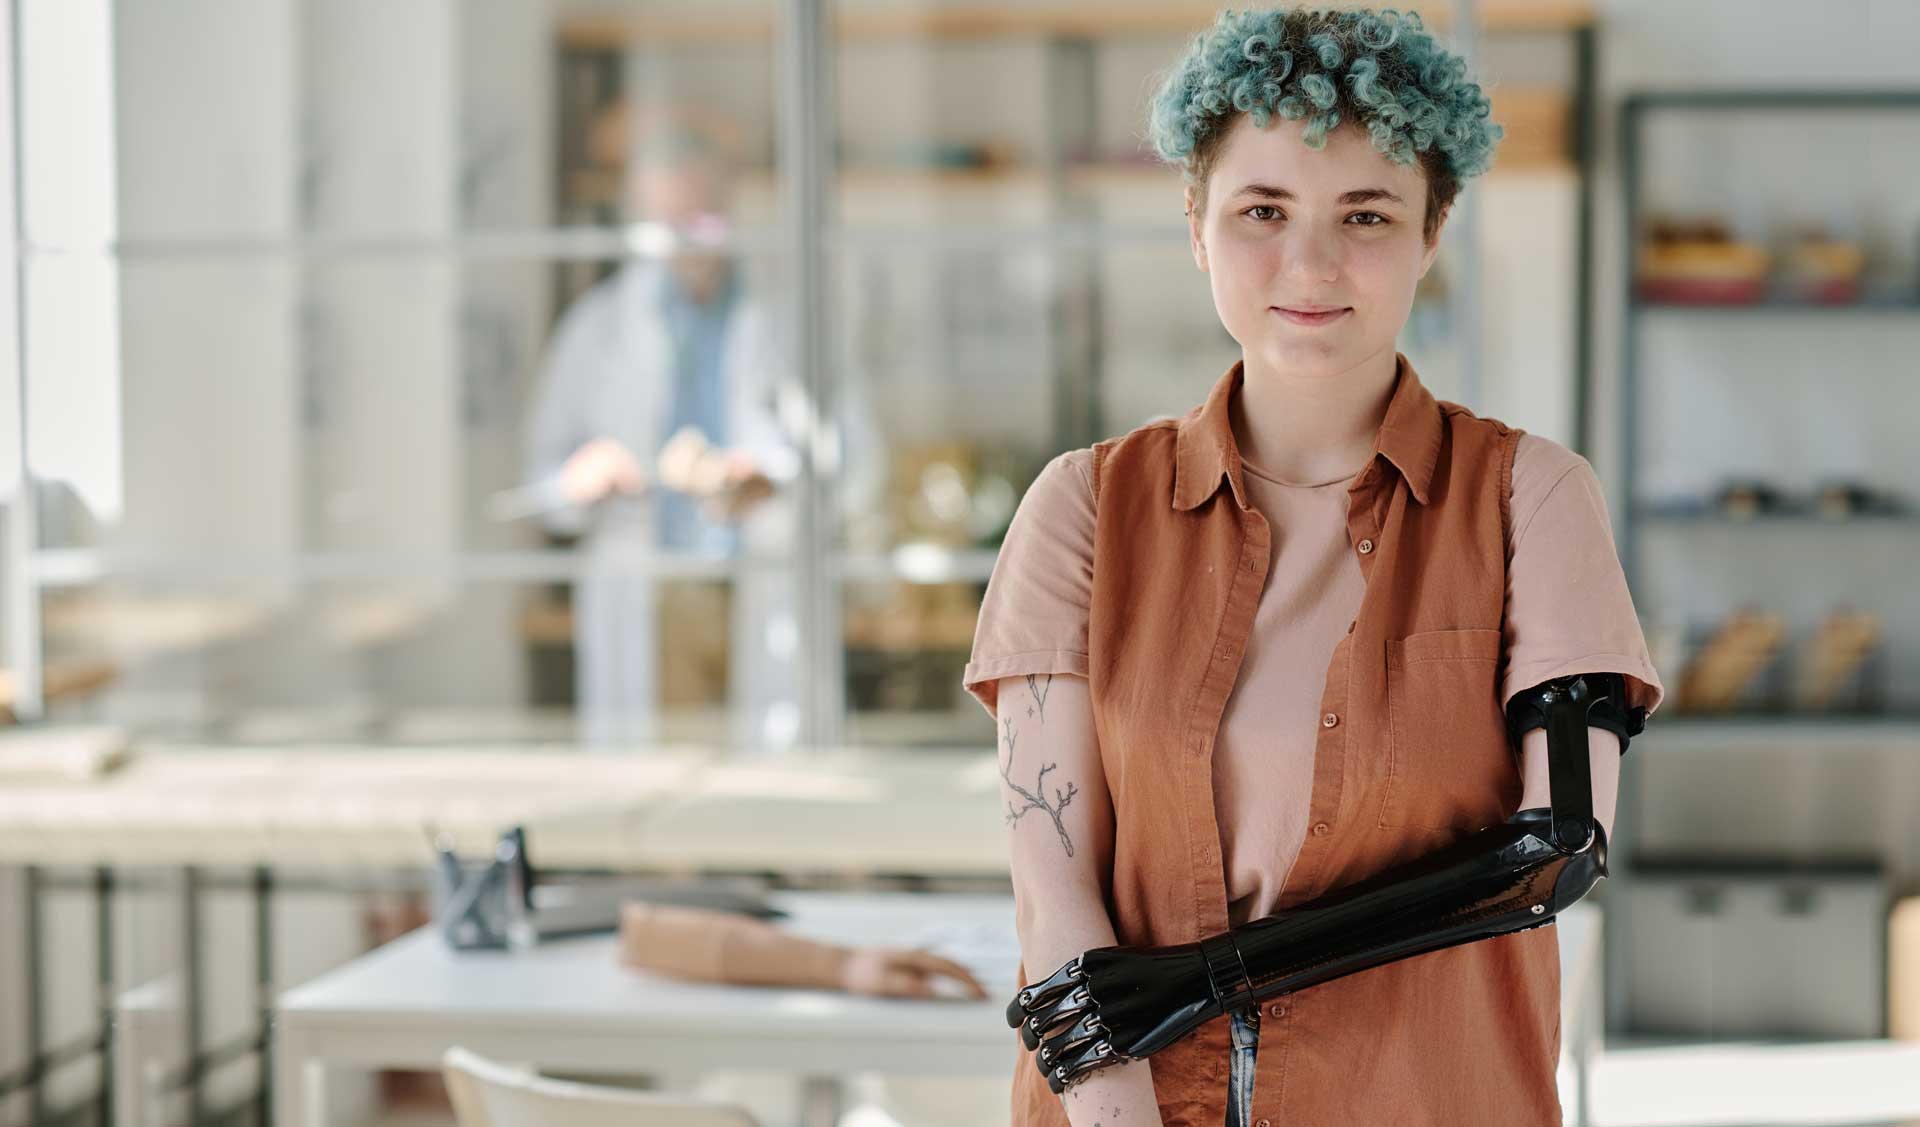 Junge Frau mit Armprotese - EUTB Verden Osterholz - Teilhabeberatung